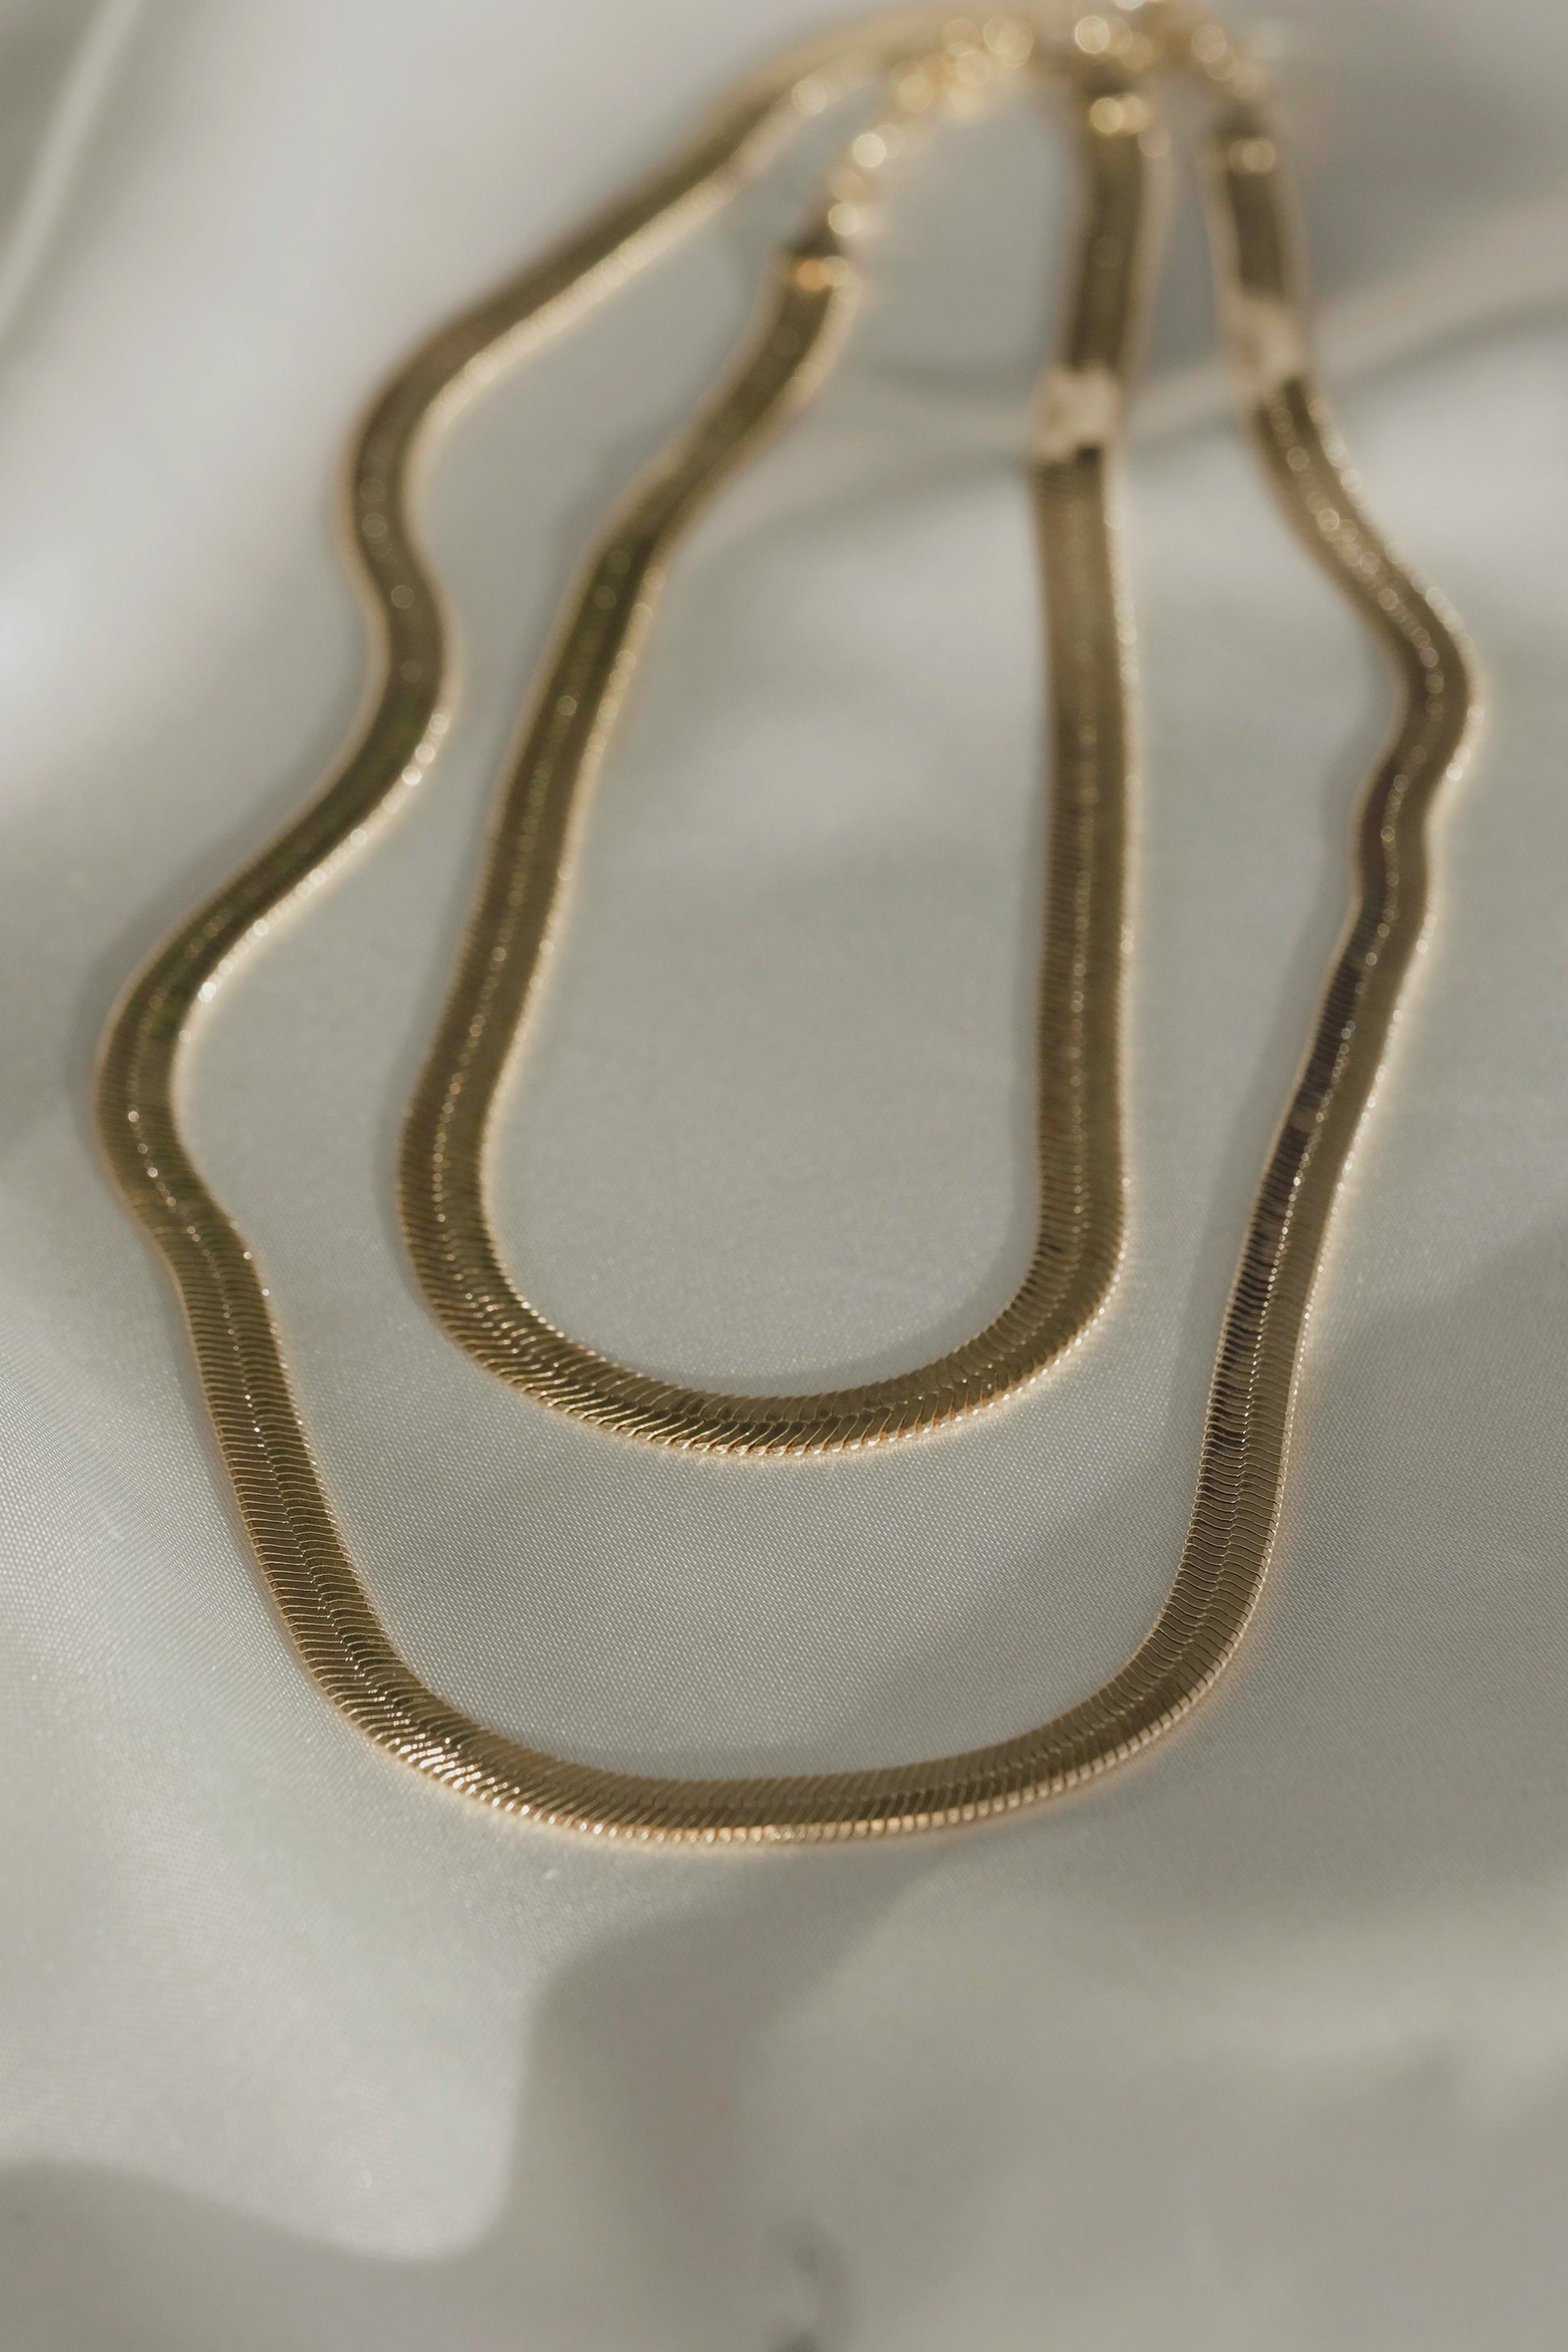 Gold Herringbone Chain Necklace, 20" - cream